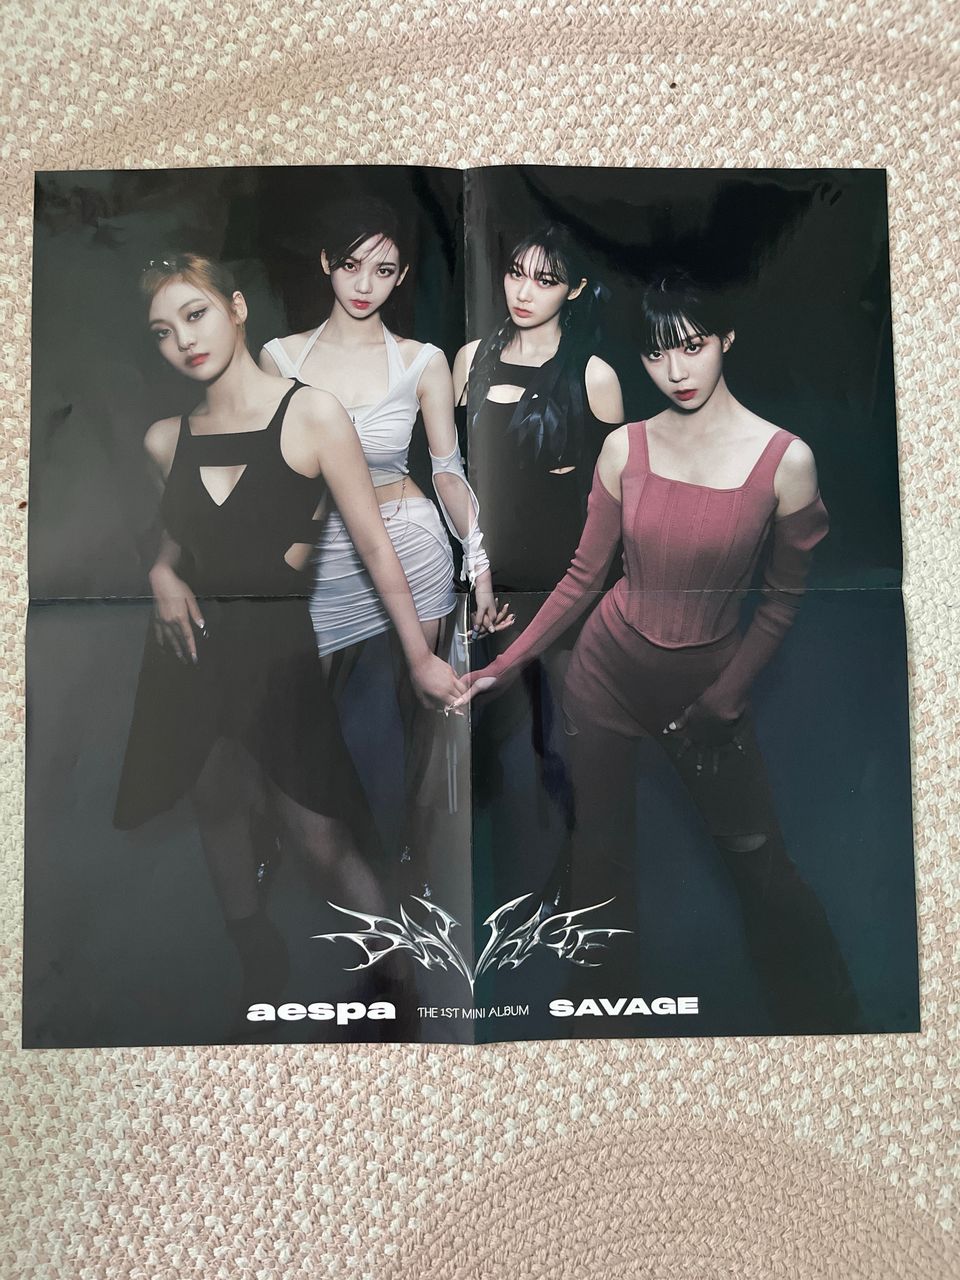 Kpop julisteet (Twice, Aespa & Blackpink)